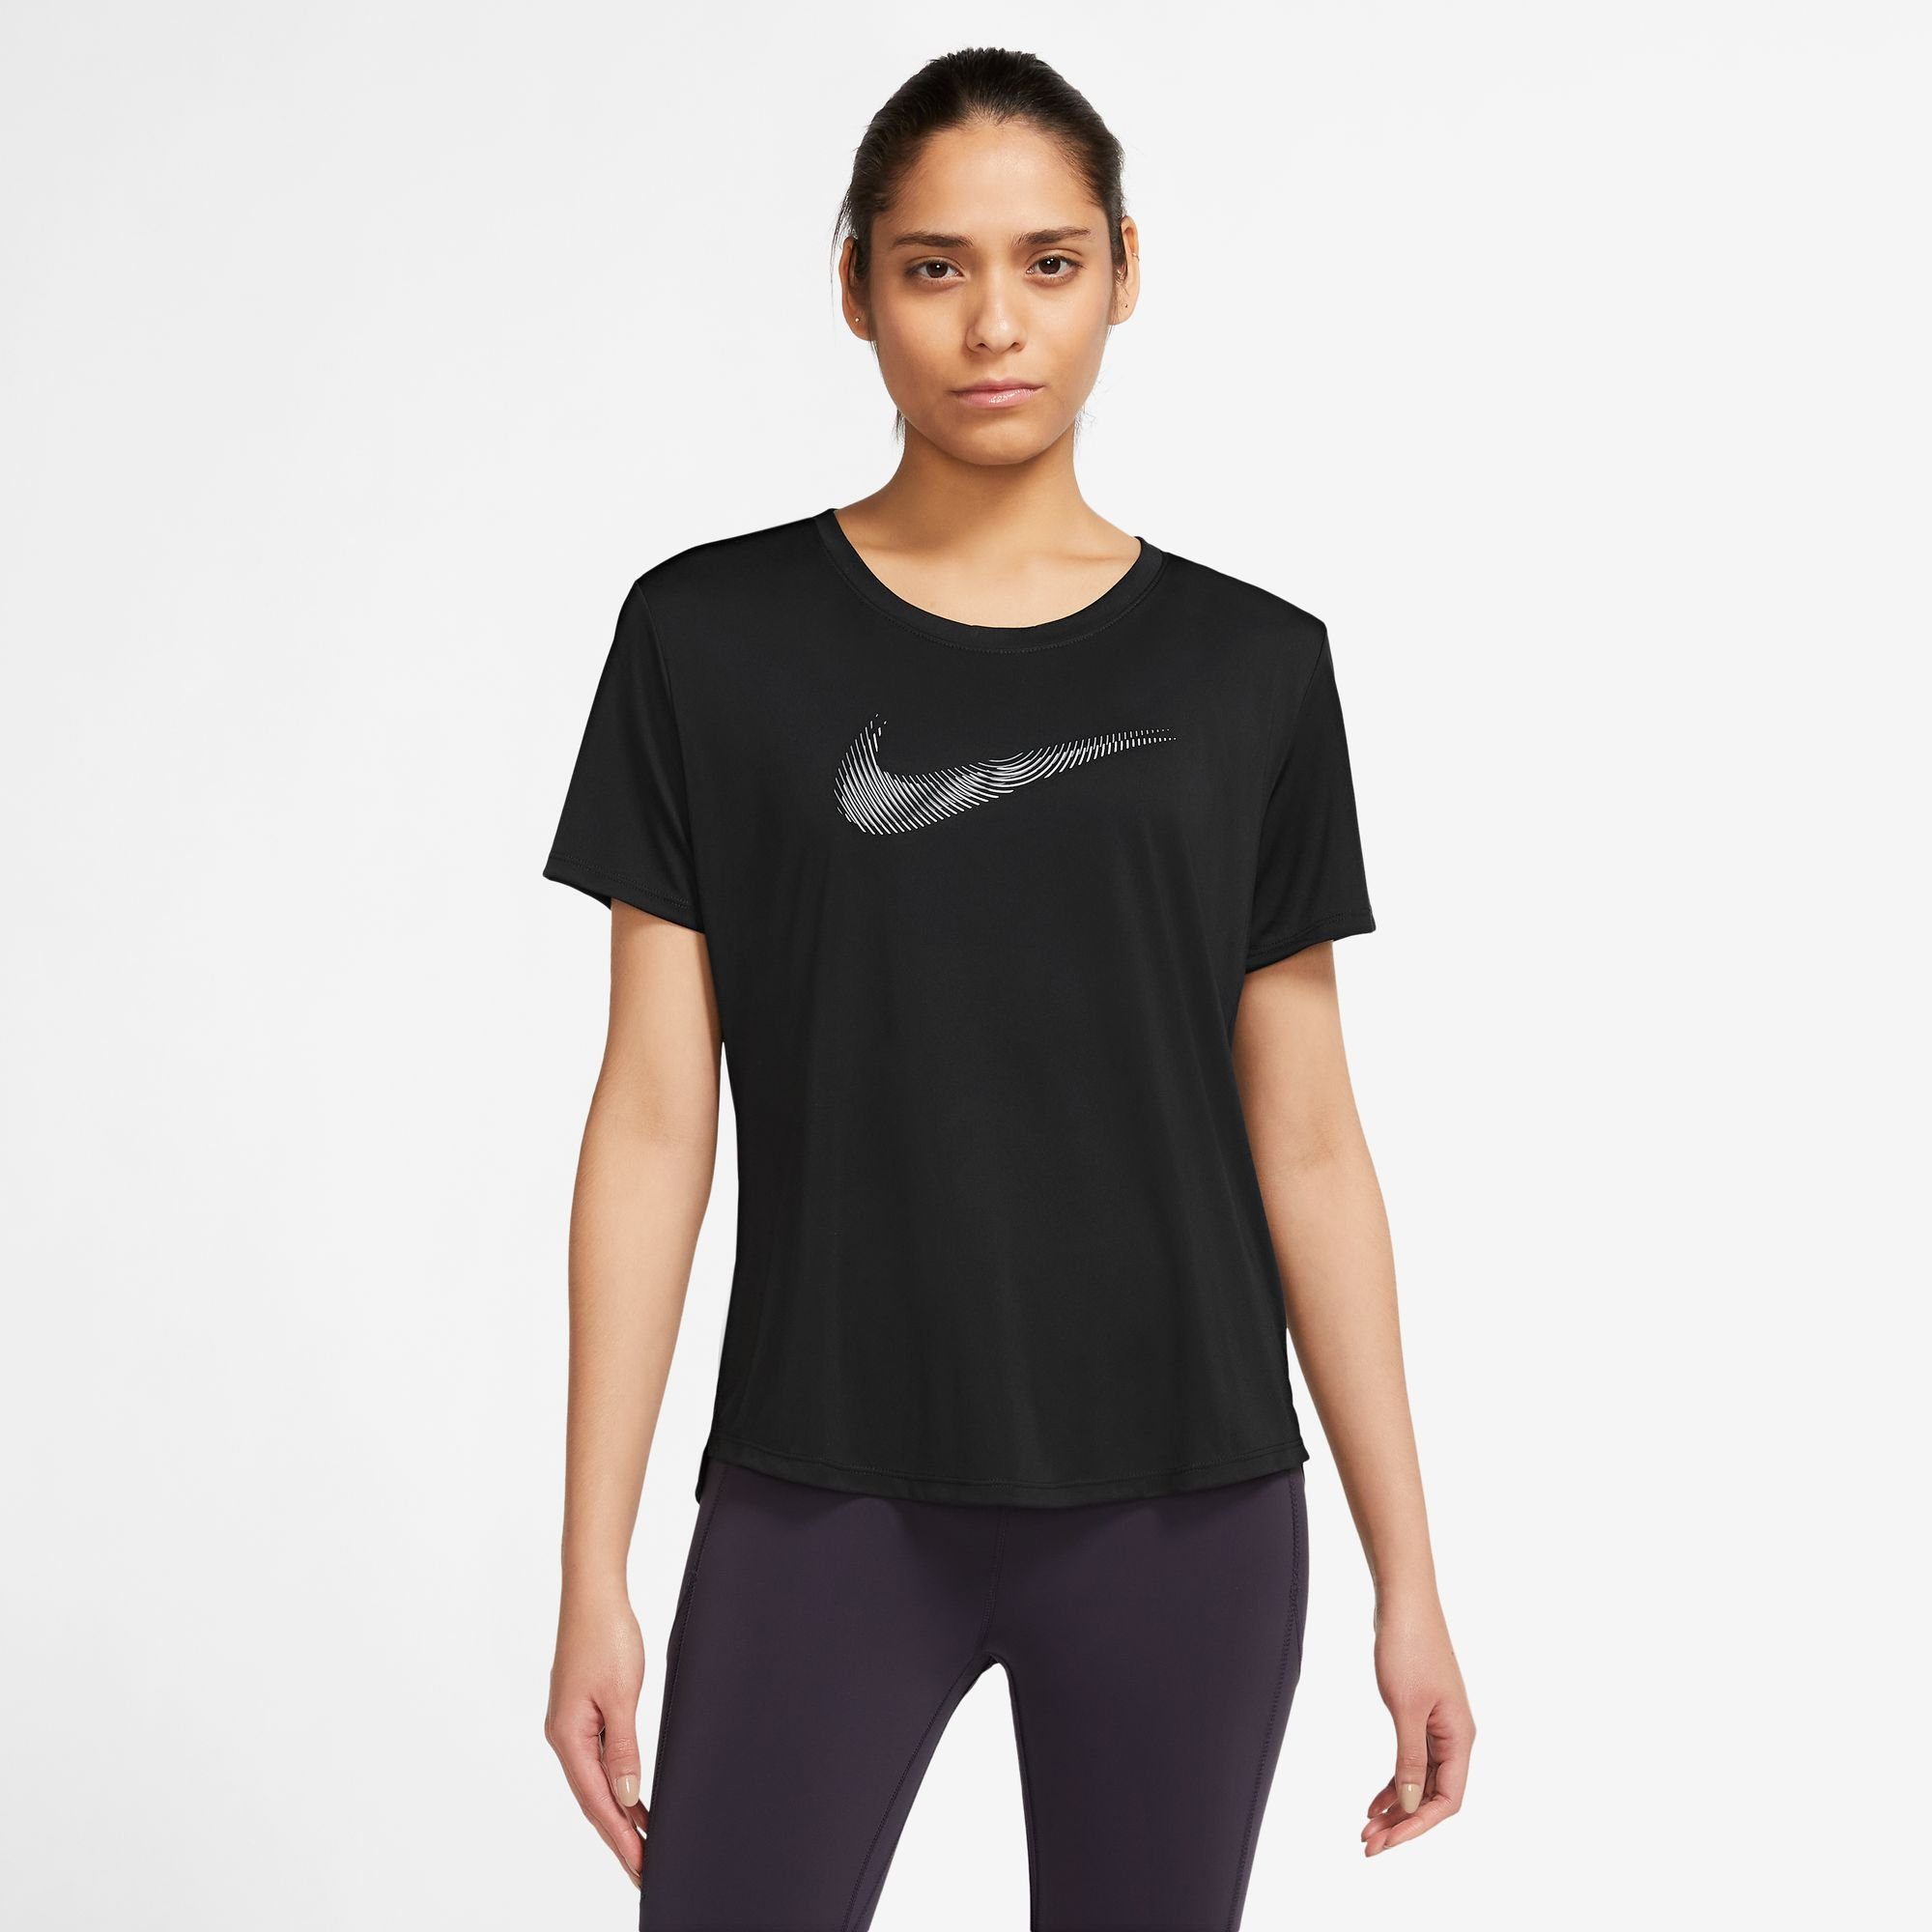 SWOOSH GREY BLACK/COOL Nike TOP DRI-FIT SHORT-SLEEVE RUNNING WOMEN'S Laufshirt